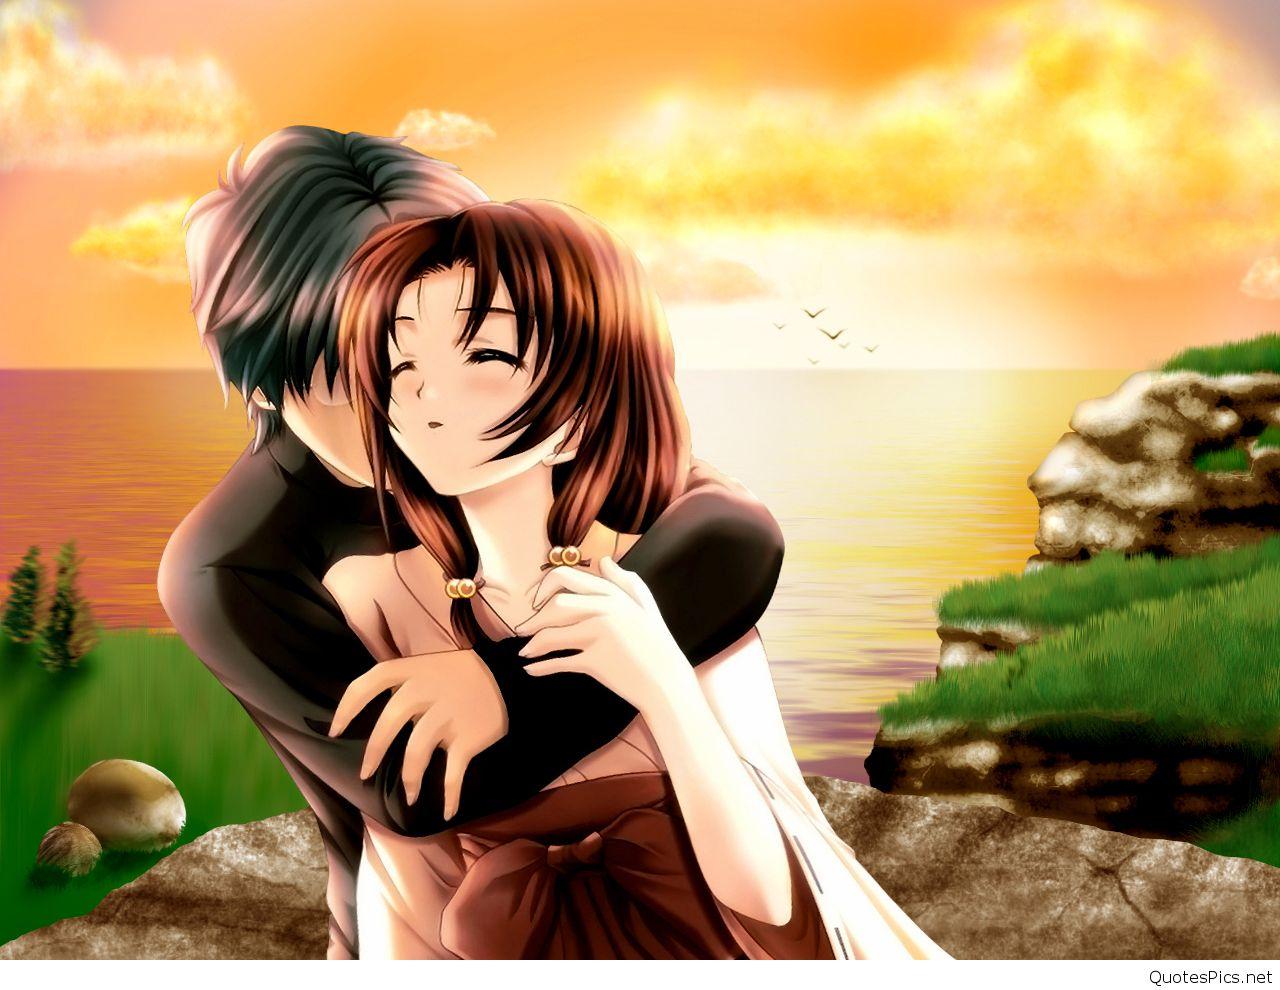 Cute Couples Cartoon Wallpapers - Top Free Cute Couples Cartoon Backgrounds  - WallpaperAccess